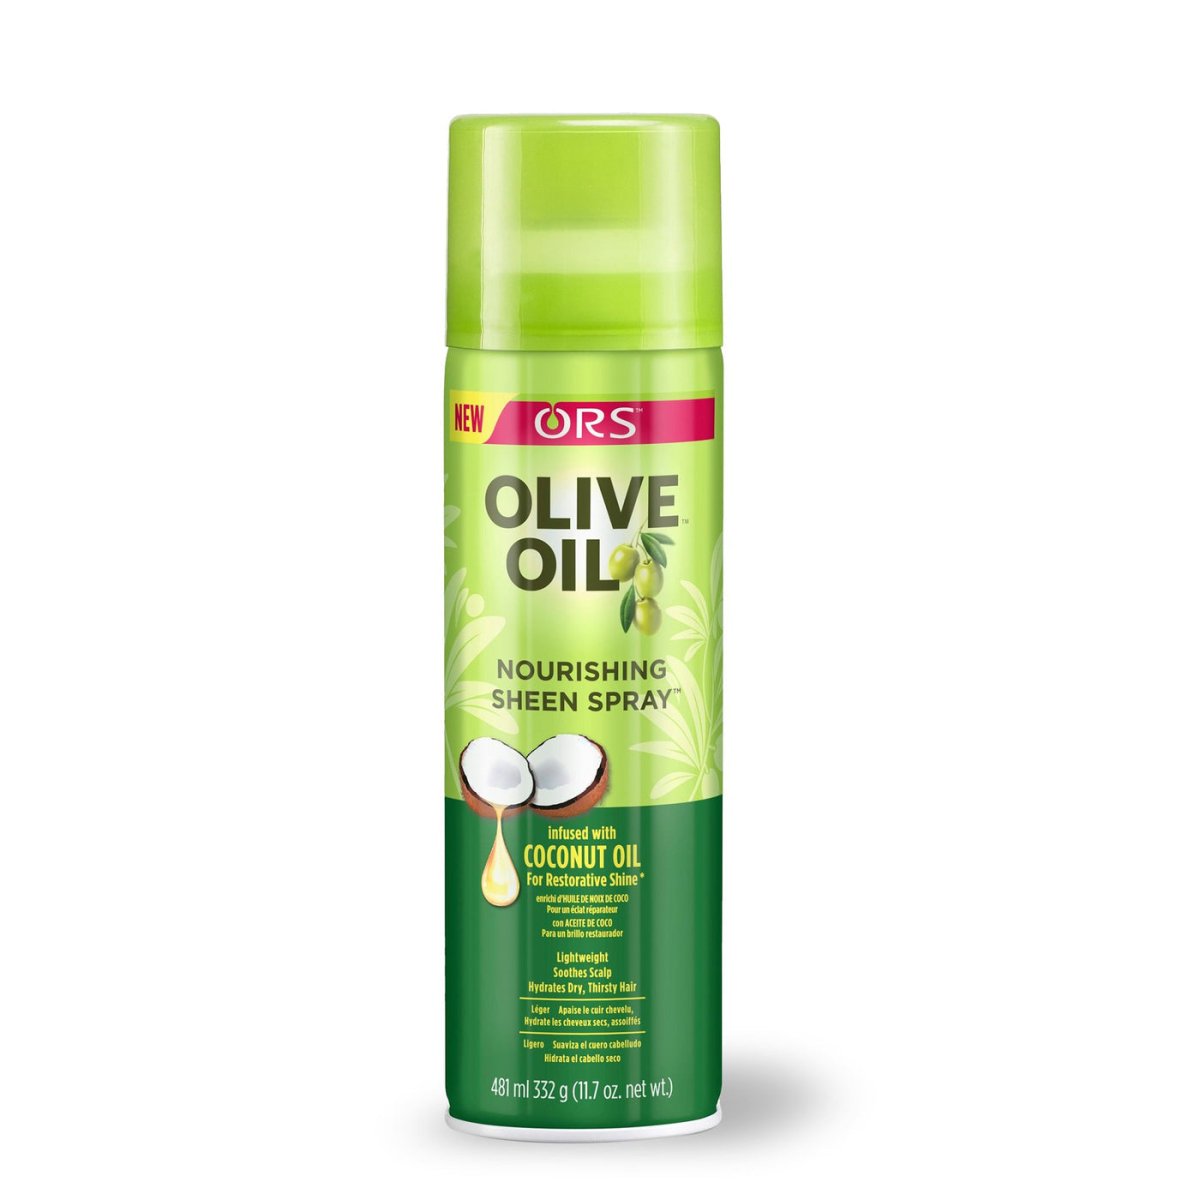 ORS Olive Oil Nourishing Sheen Spray 11.7oz - Southwestsix Cosmetics ORS Olive Oil Nourishing Sheen Spray 11.7oz Hair Sheen ORS Southwestsix Cosmetics 632169110308 ORS Olive Oil Nourishing Sheen Spray 11.7oz